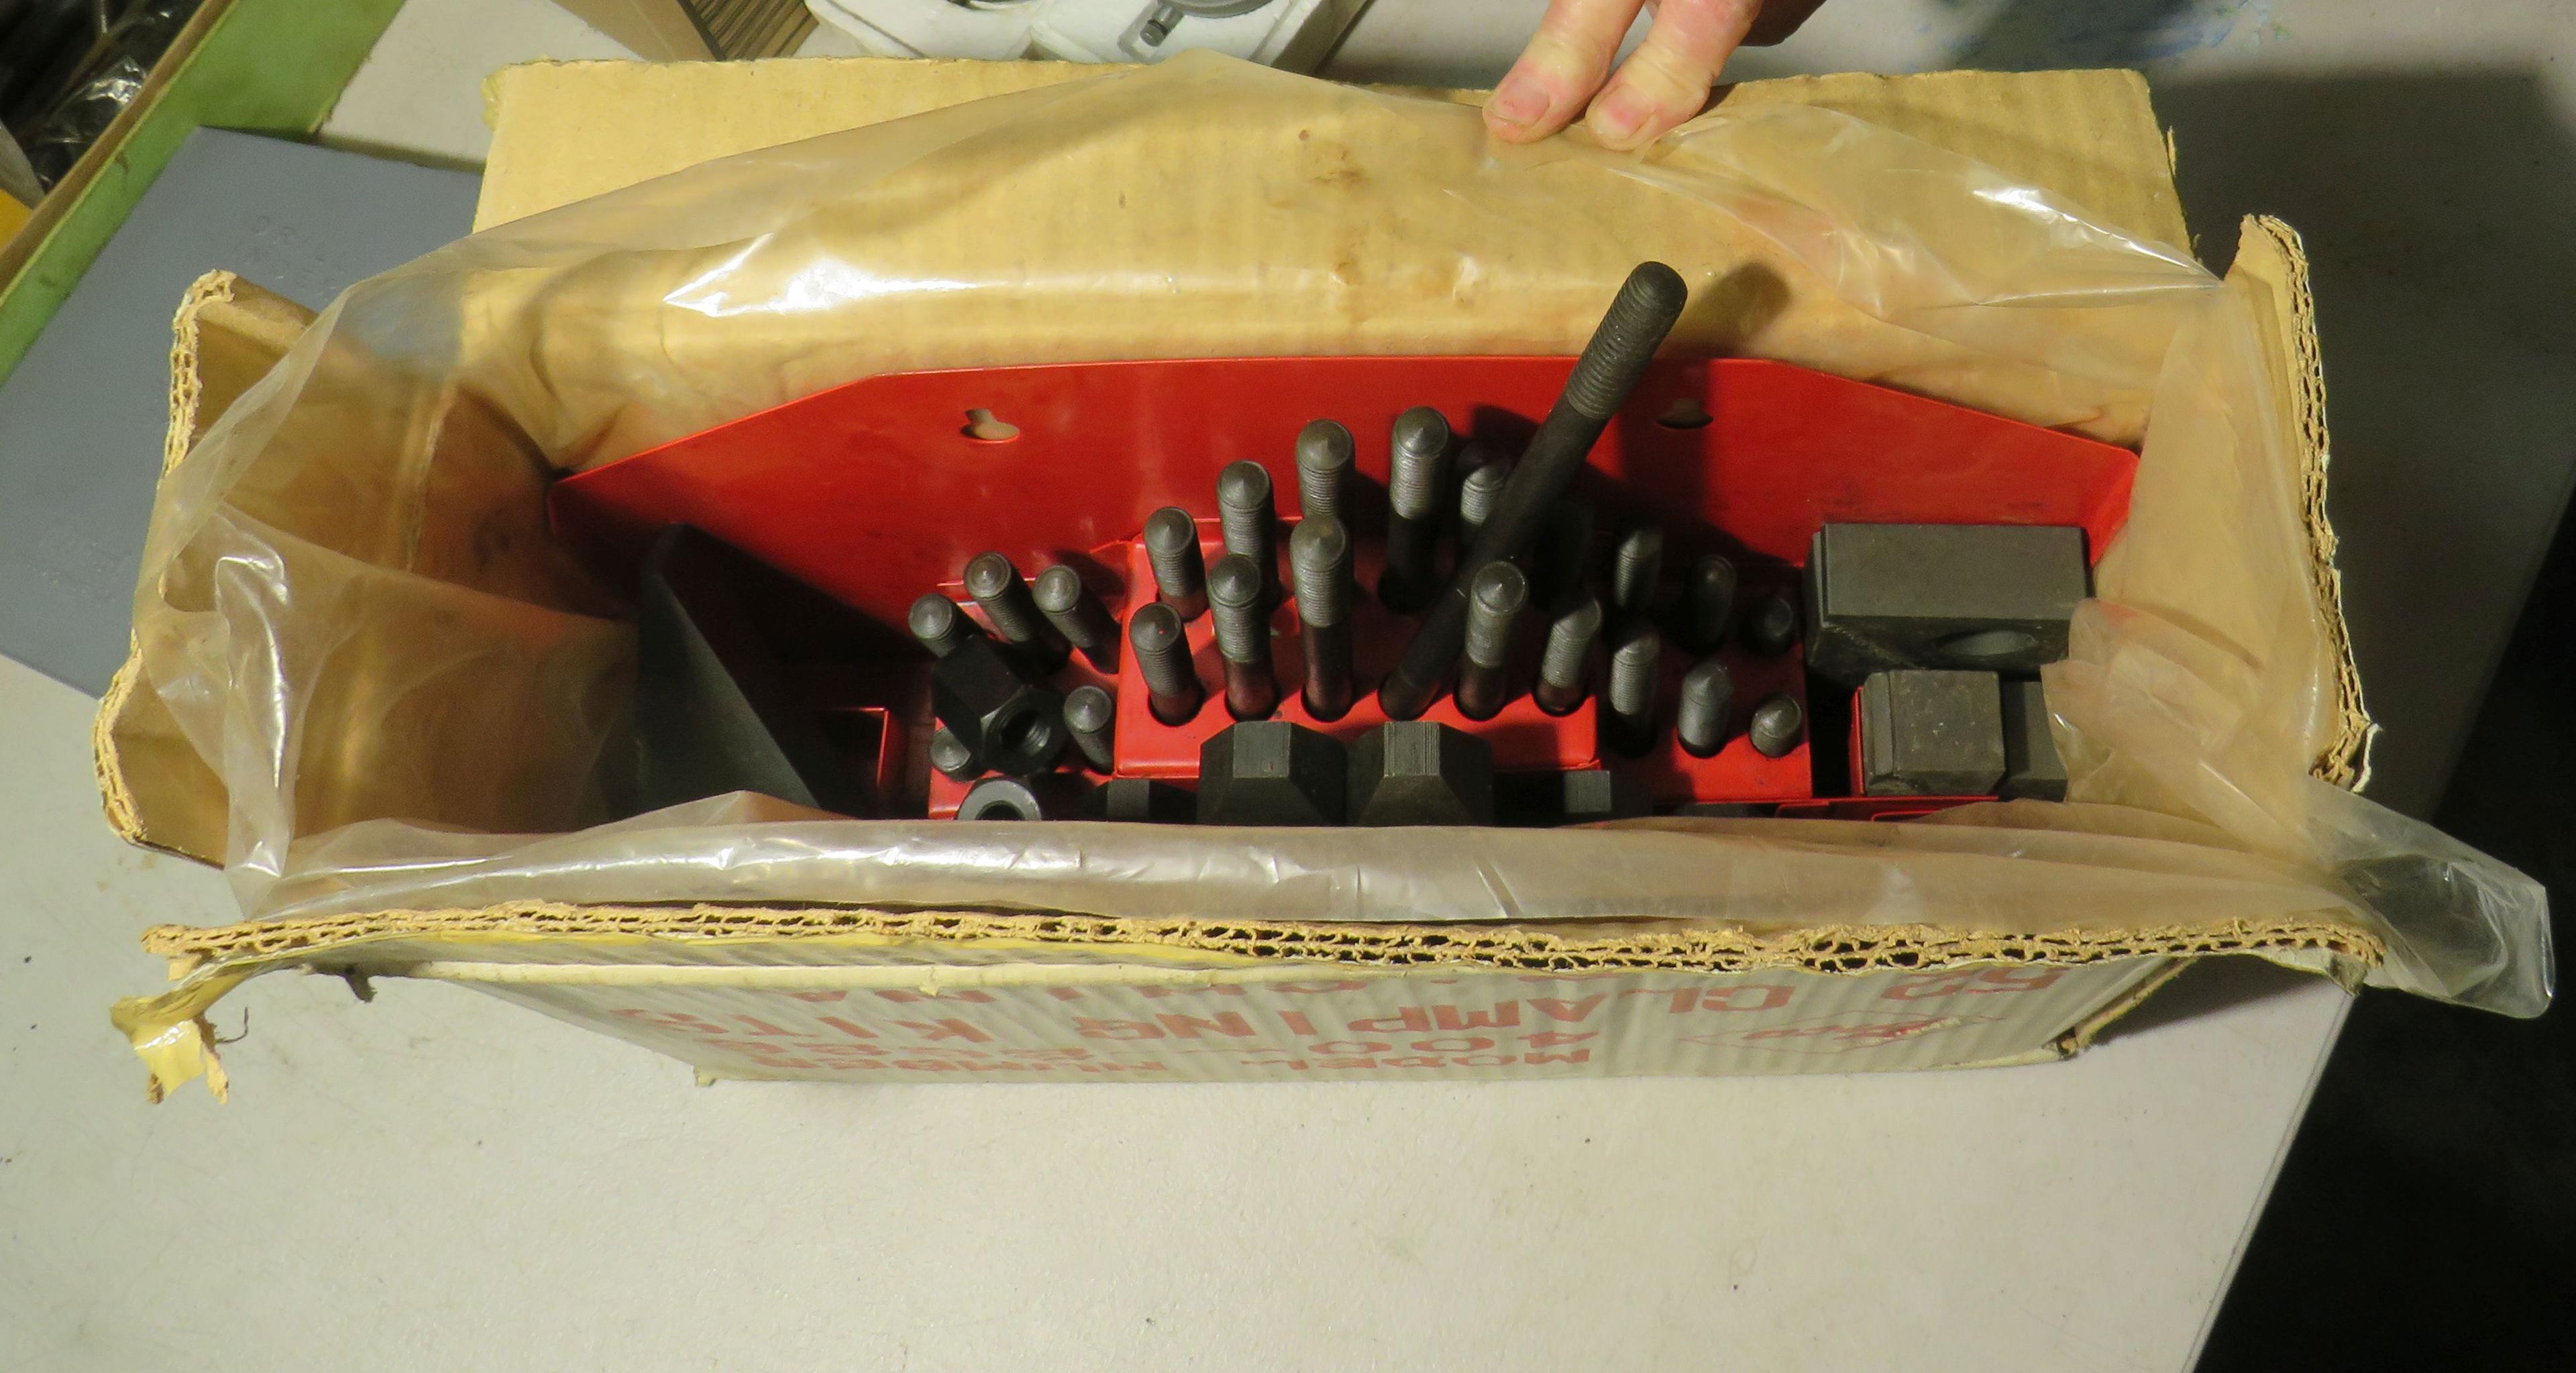 Enco model 400-262652 clamping kit for milling machine new in box